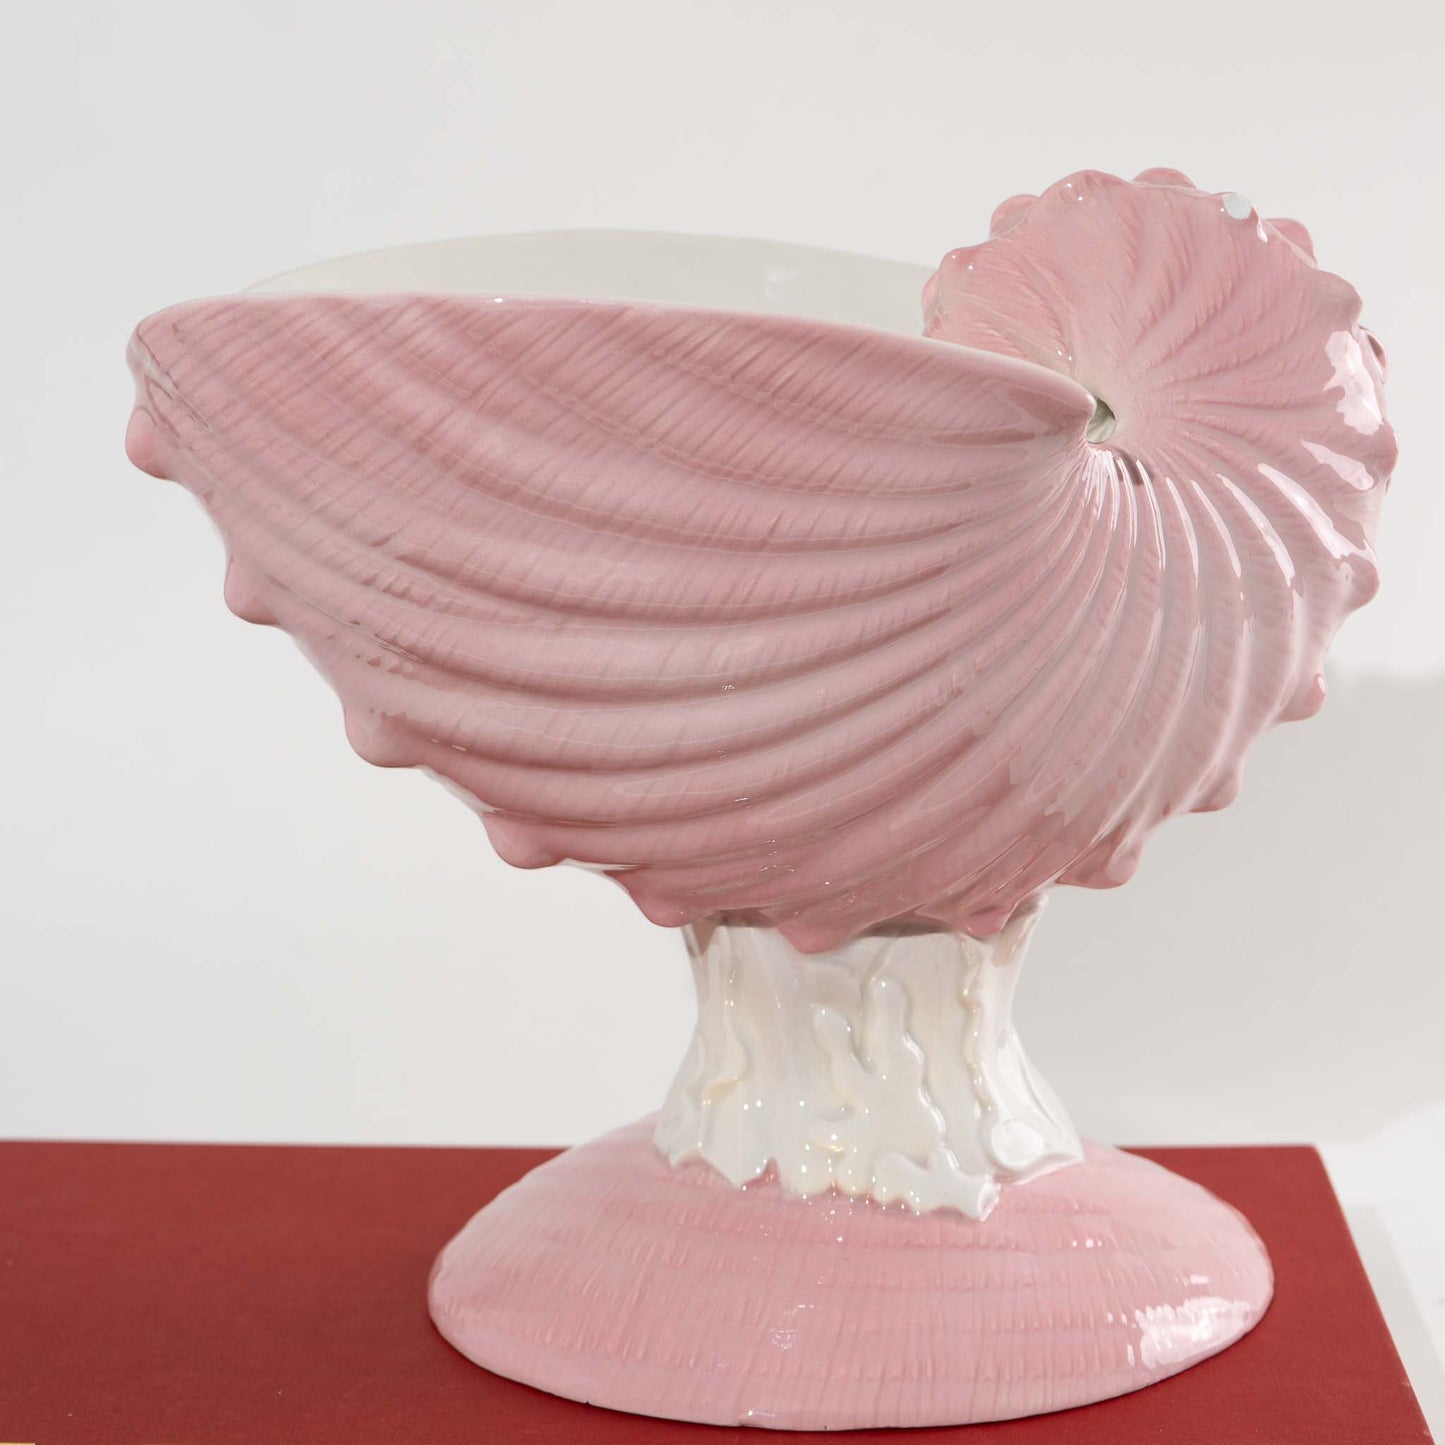 Vintage Italian Majolica Ceramic Sea Shell Vase - 1970s decor